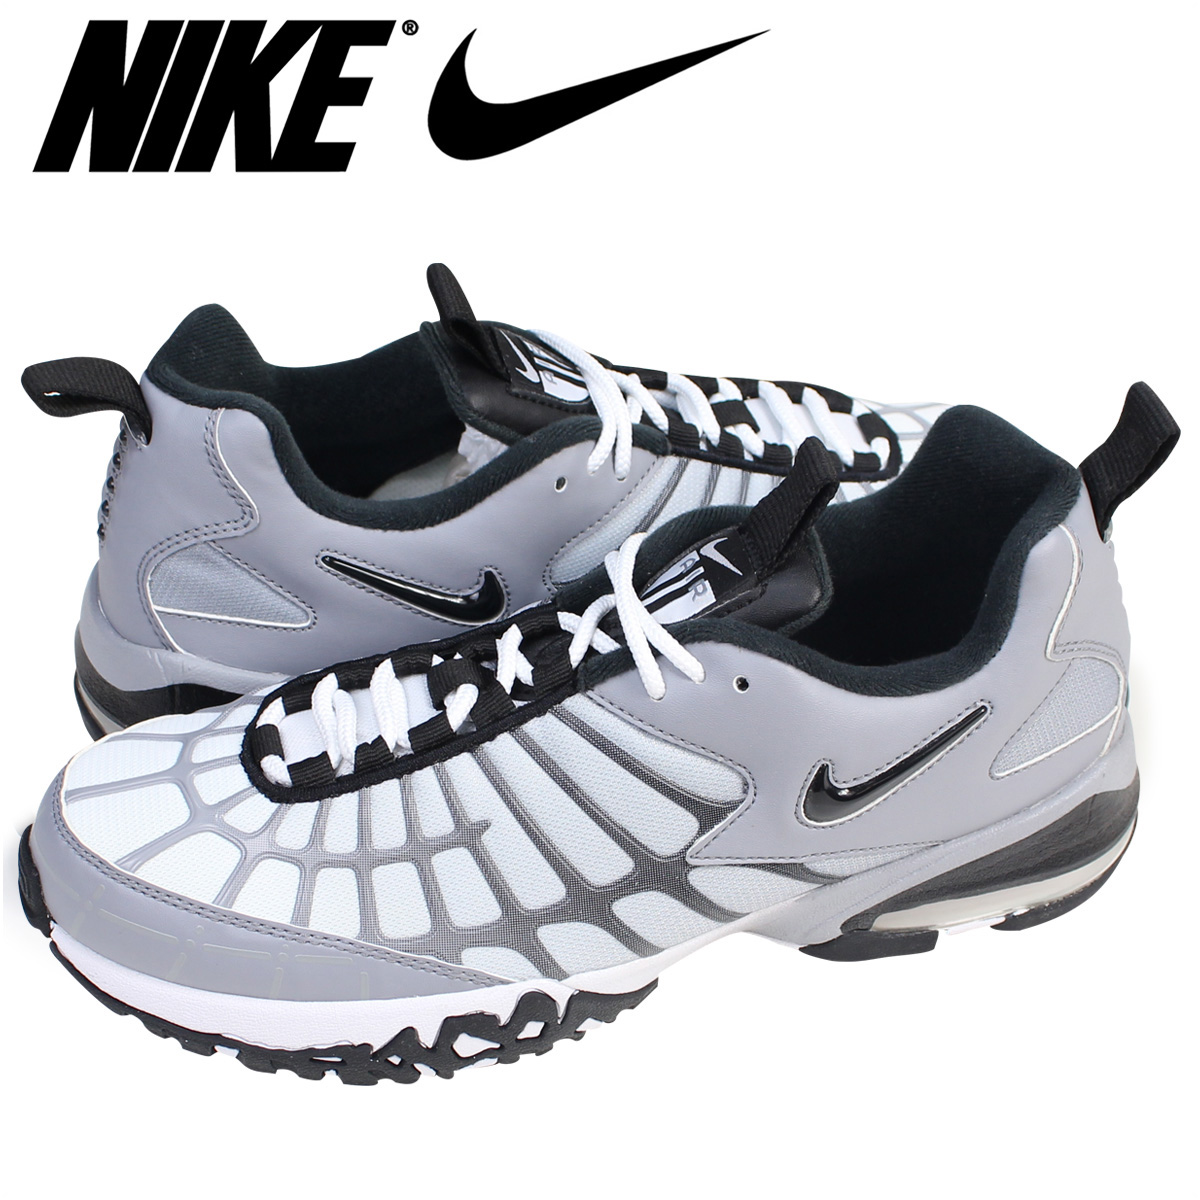 men's nike air max 120 training shoes